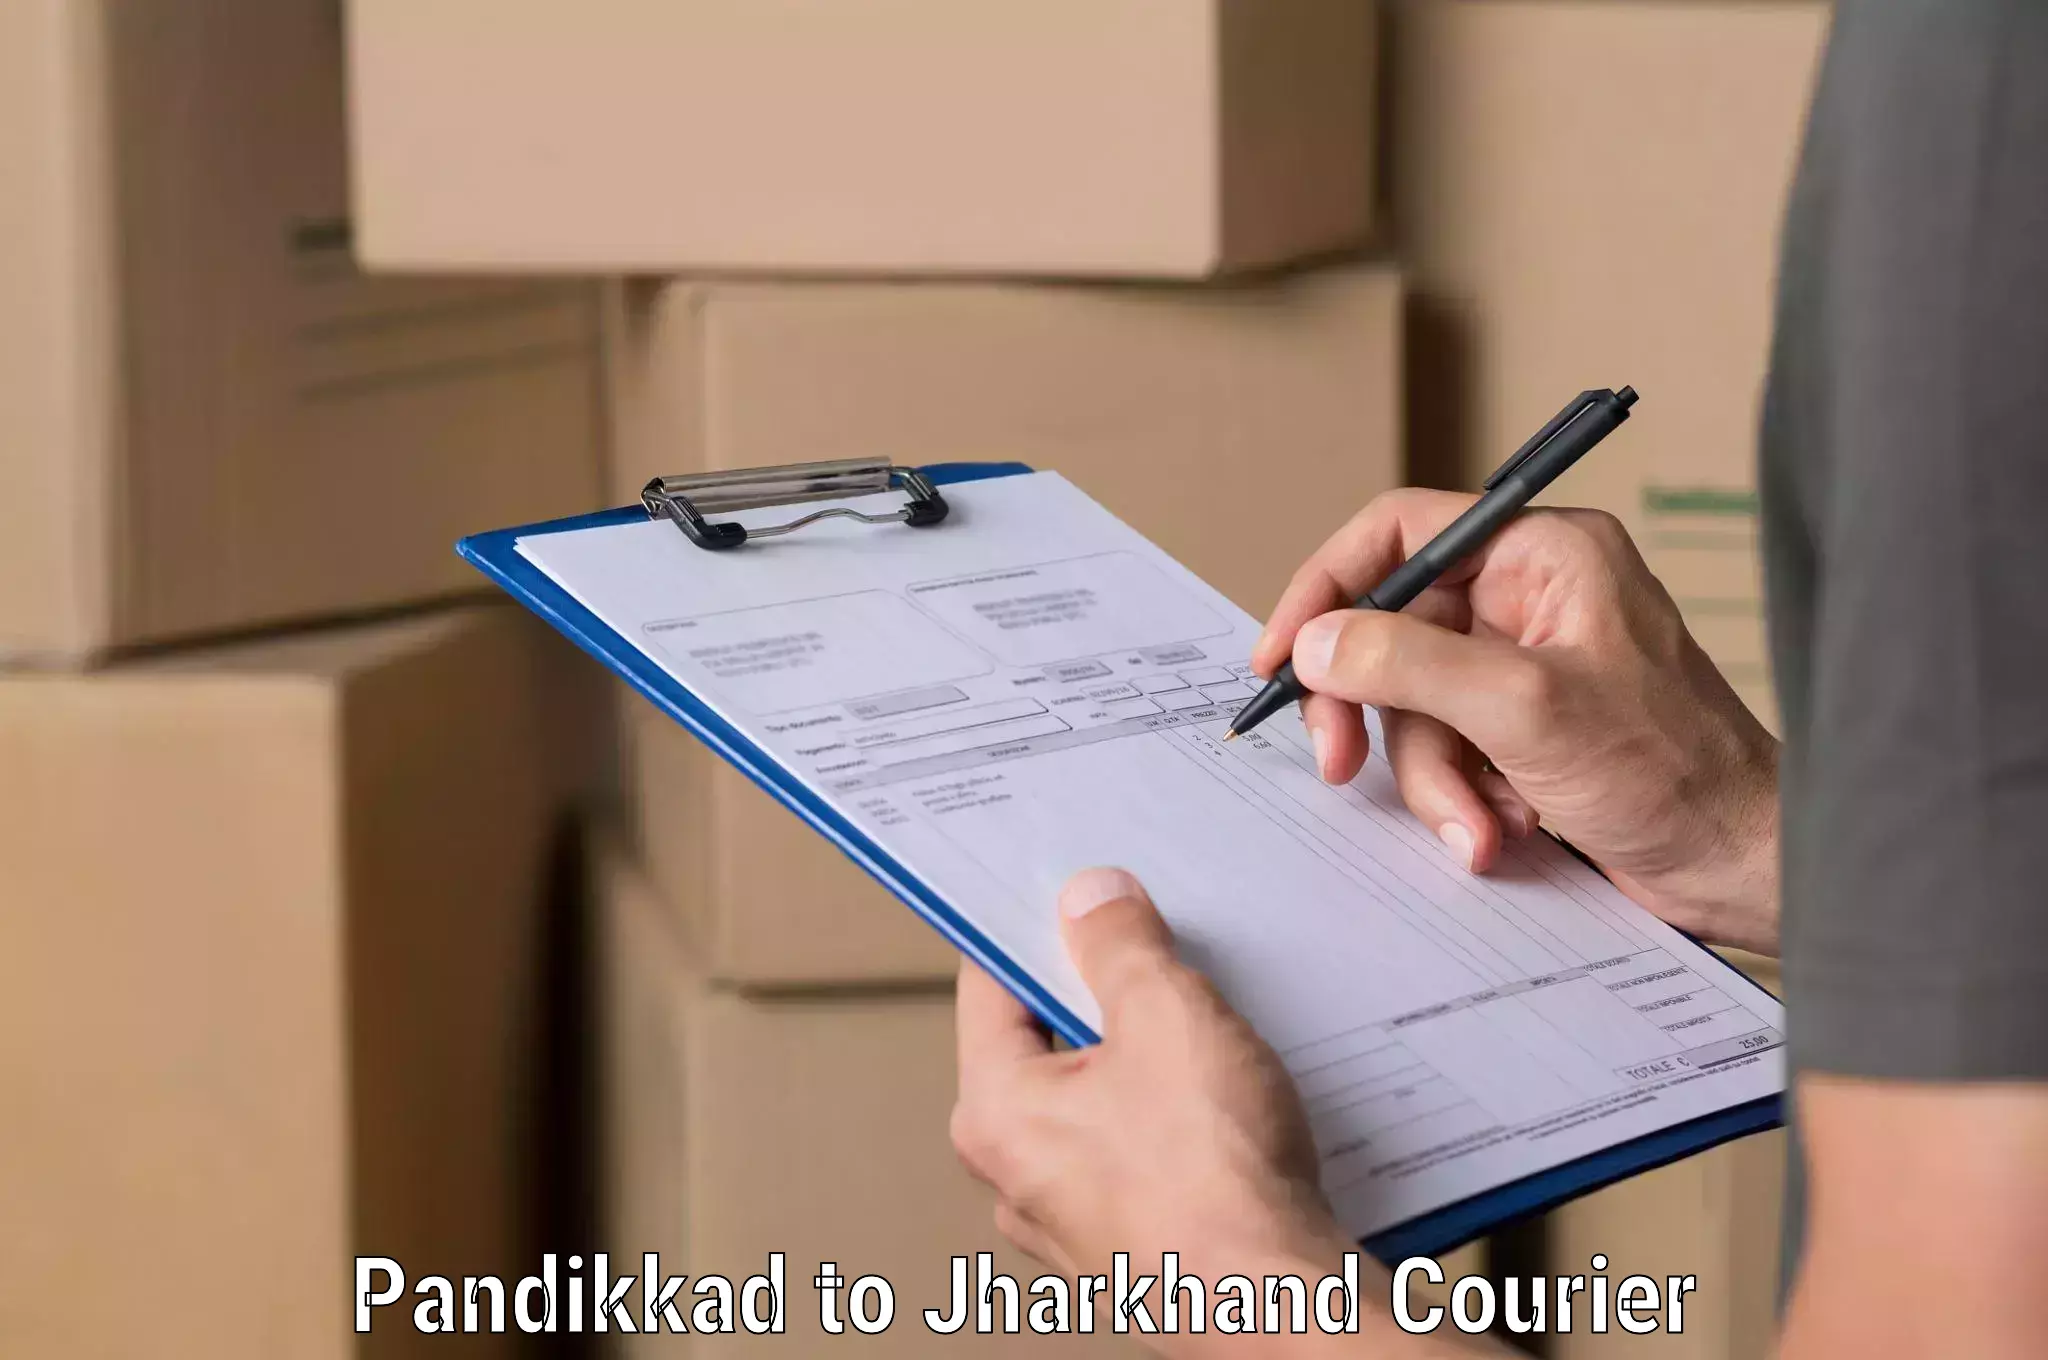 Efficient cargo handling Pandikkad to Jharkhand